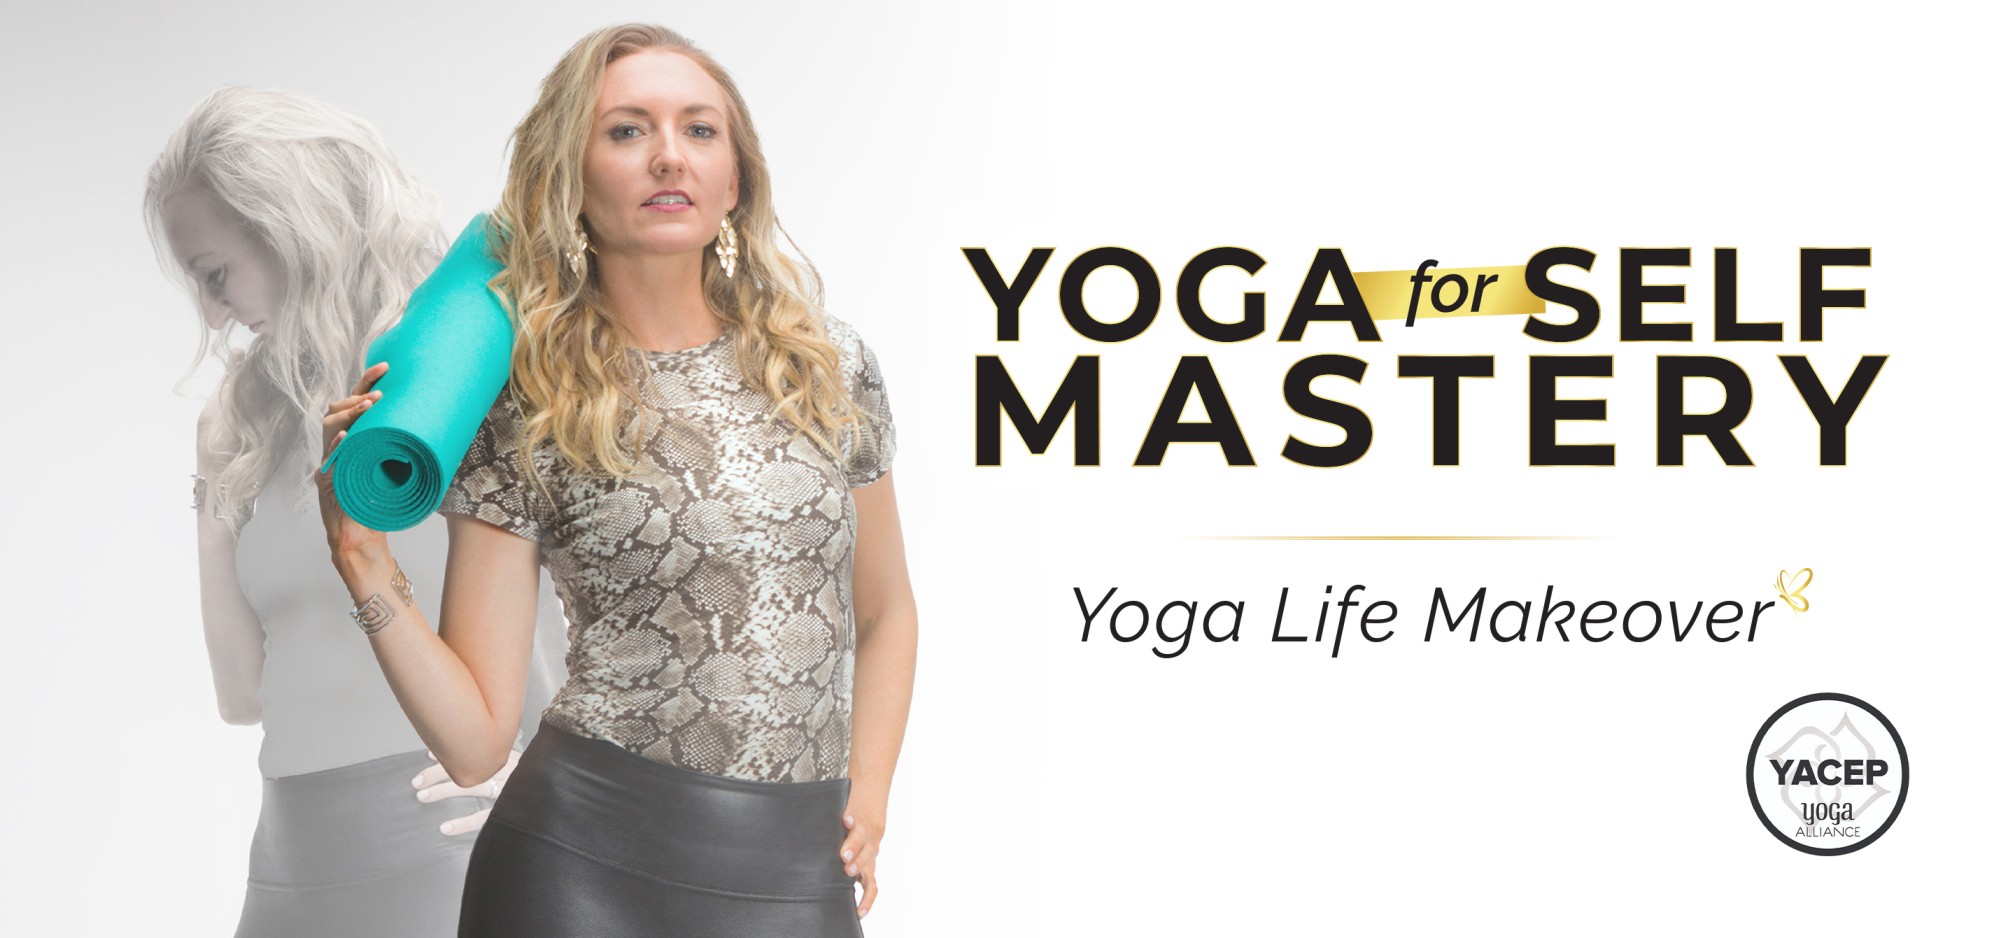 Yoga for Self Master featuring Brett Larkin in a meditative state